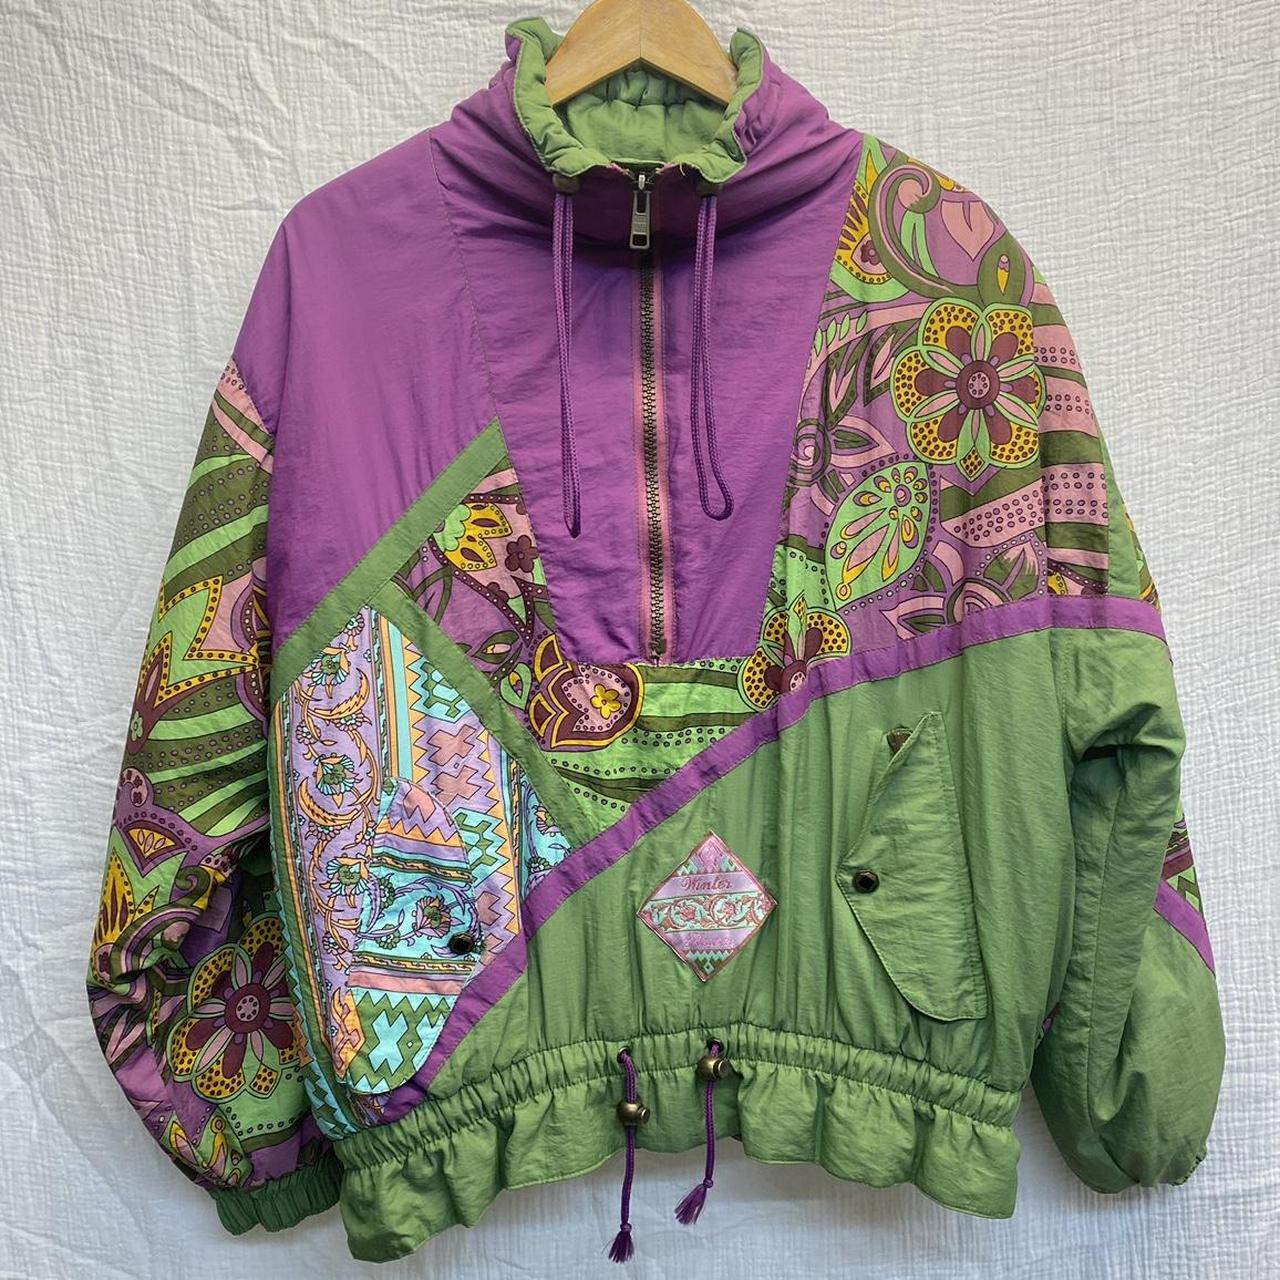 Vintage Ski Jacket 80s 90s Colourful Abstract... - Depop